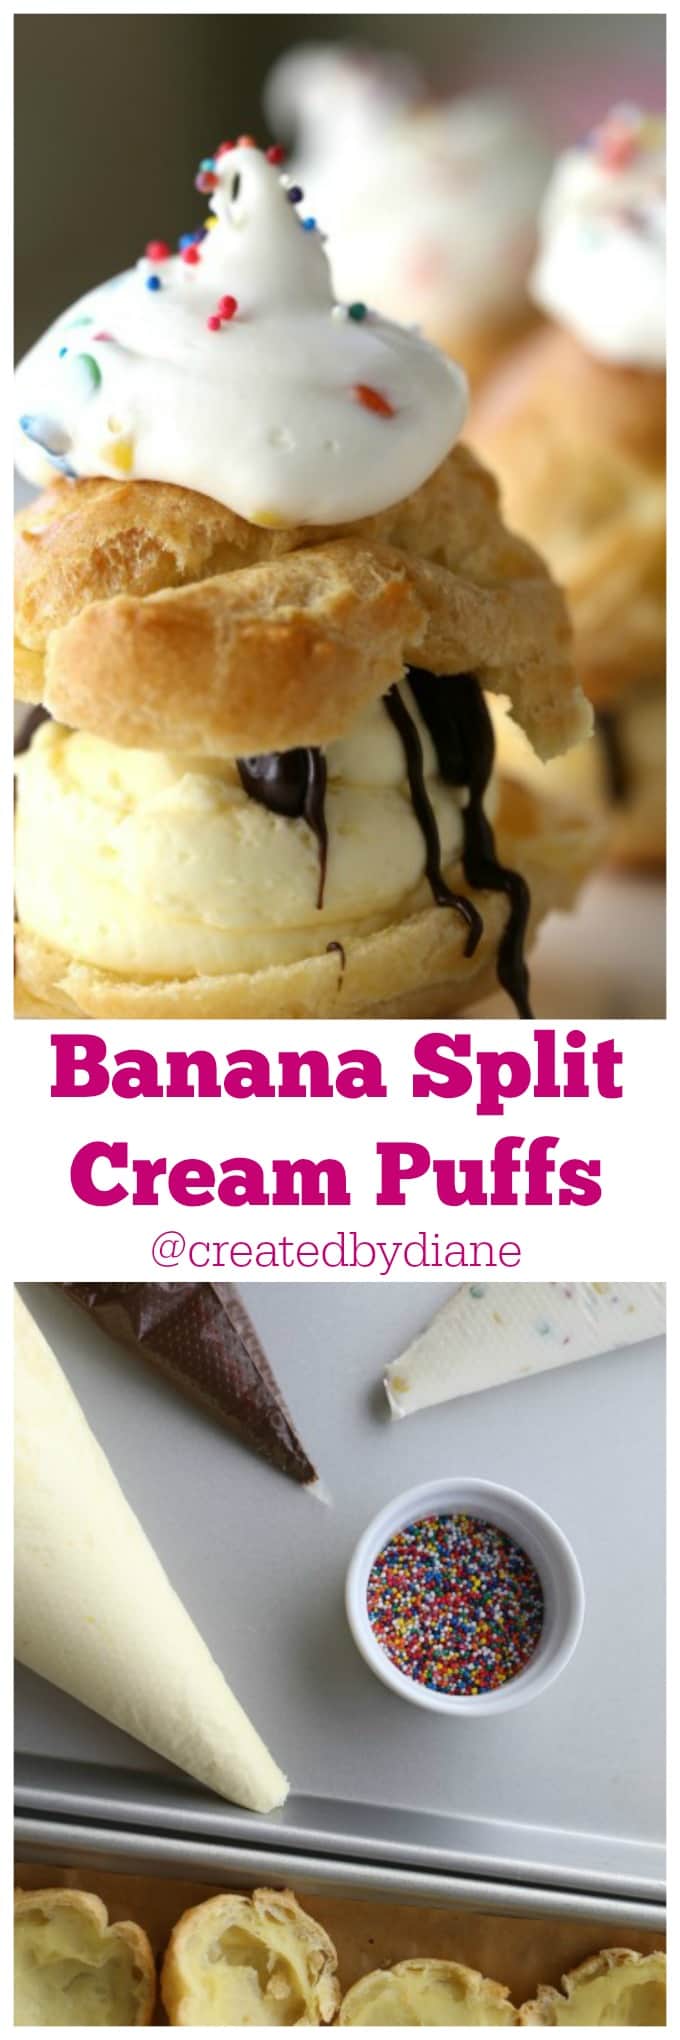 Banana Split Cream Puffs @createdbydiane